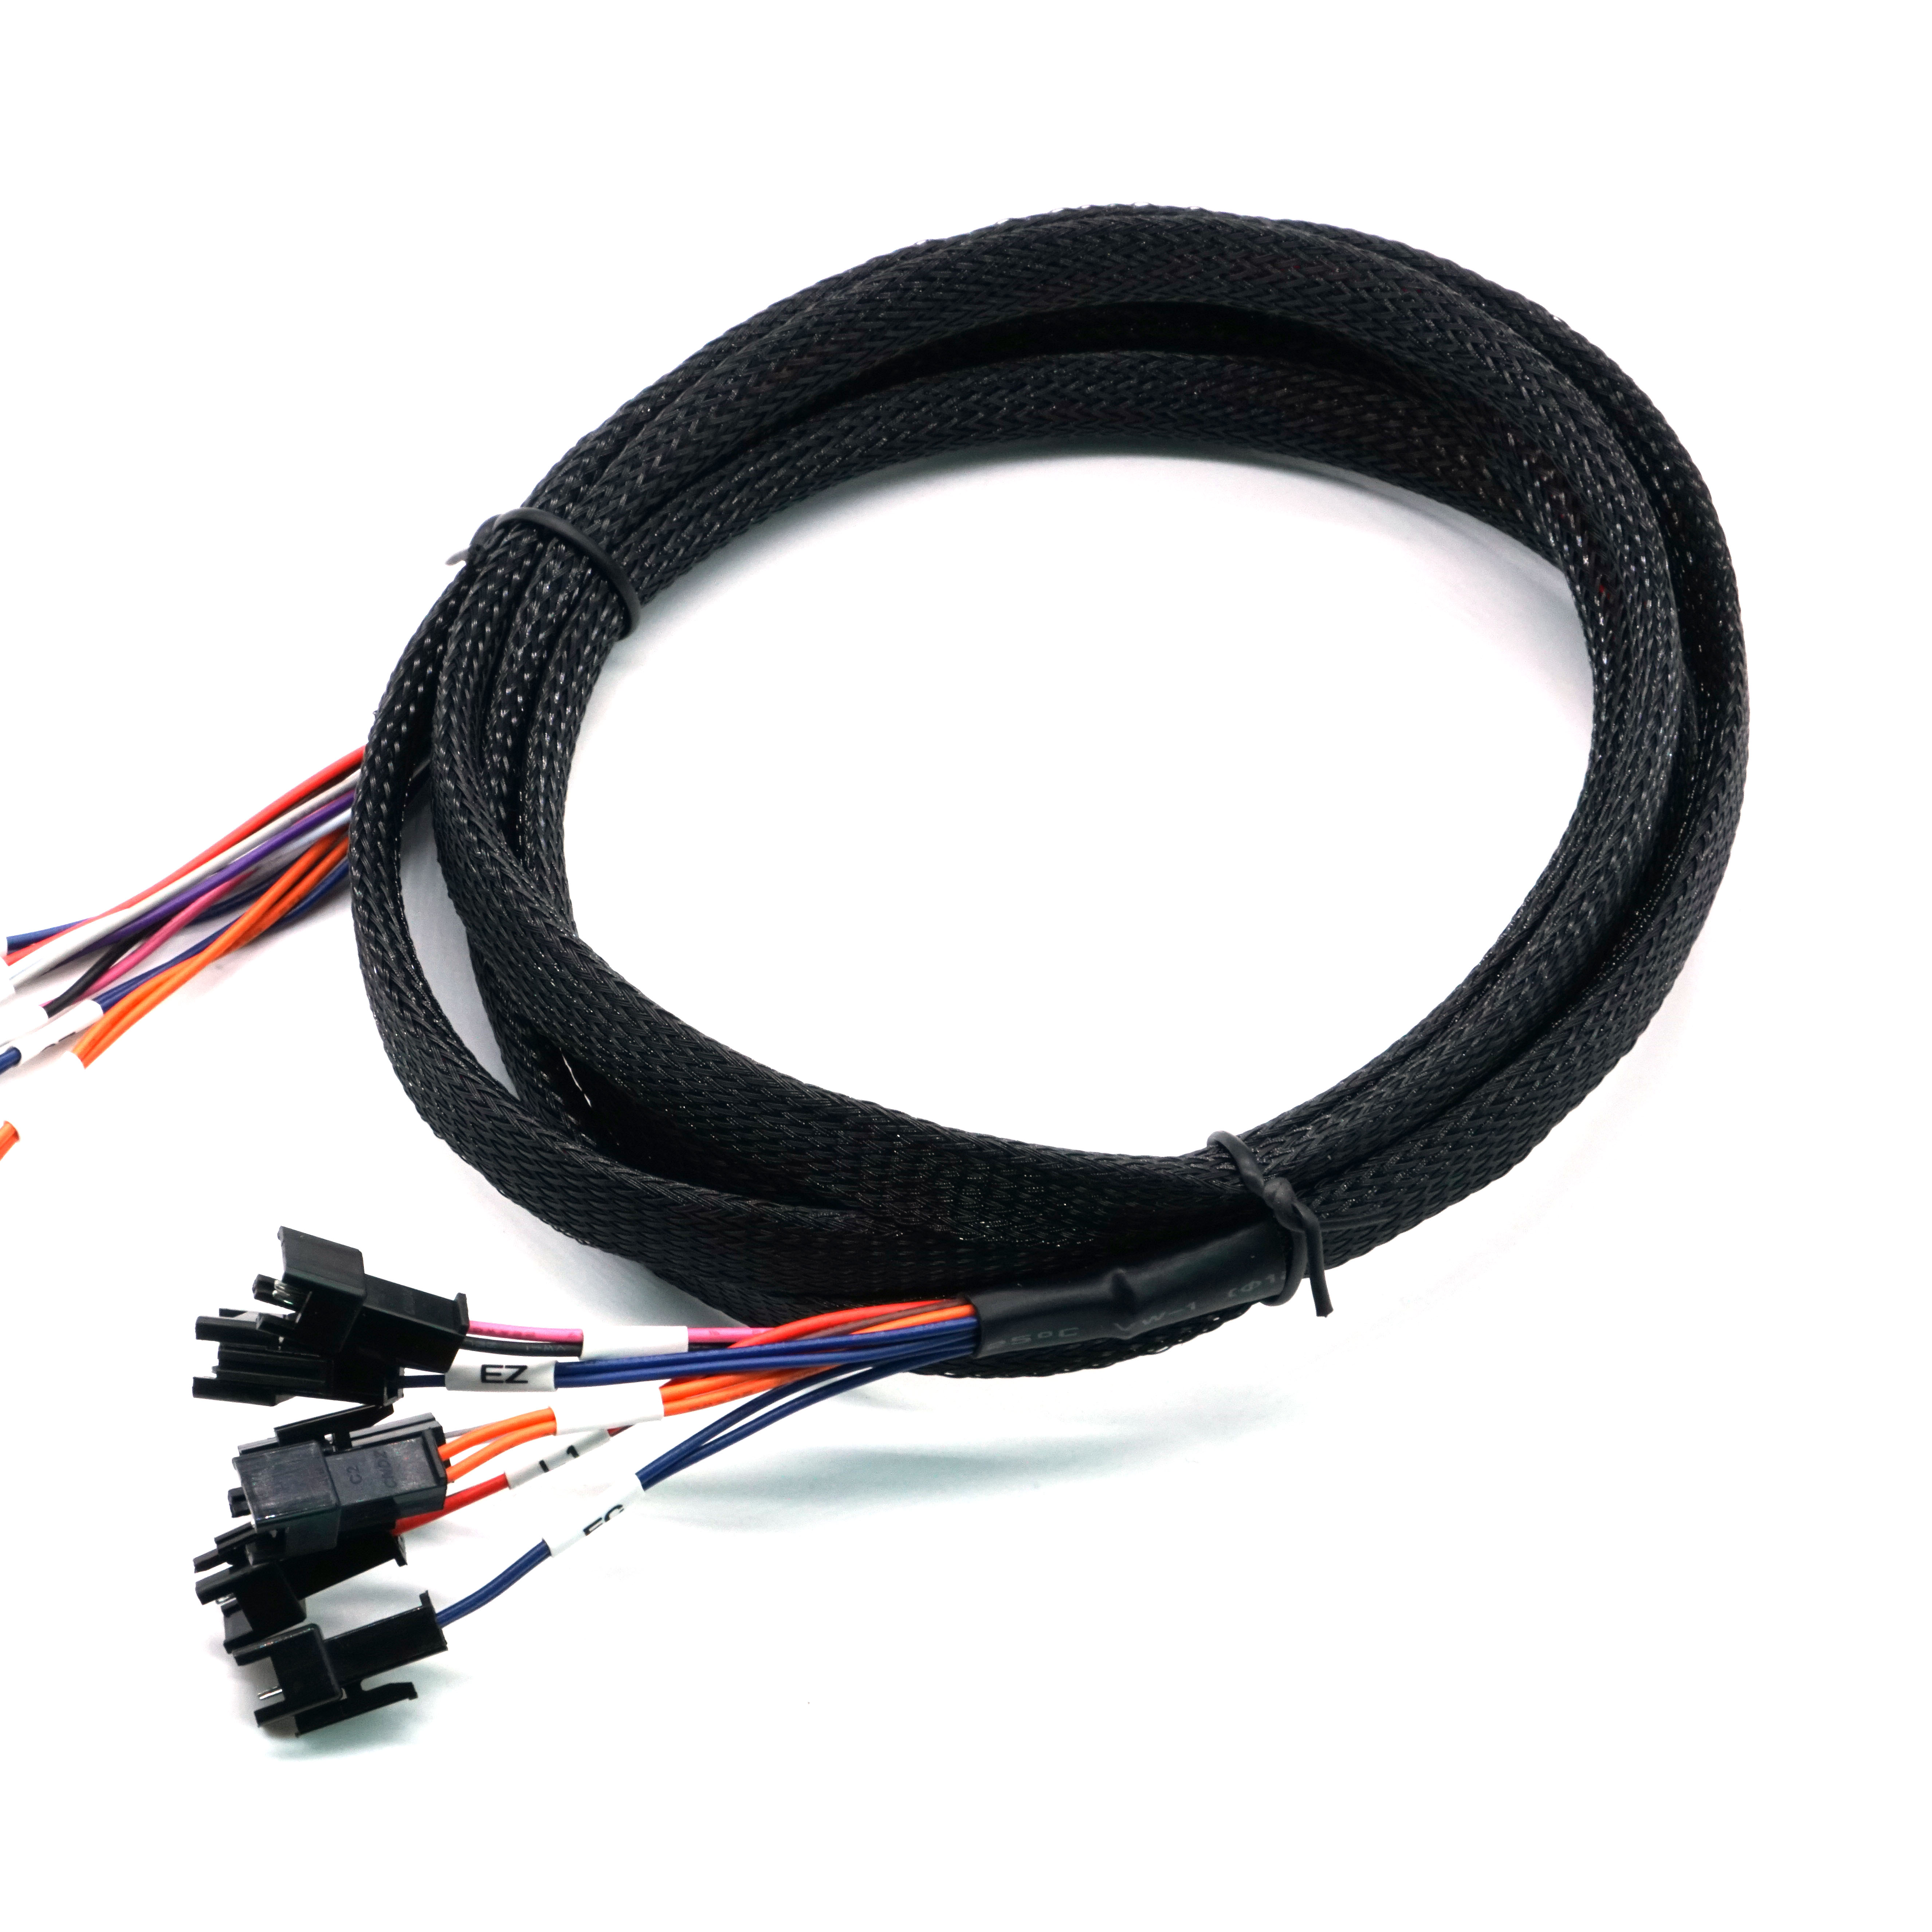 M. iungo Ad Dupont Plug Wire Cable